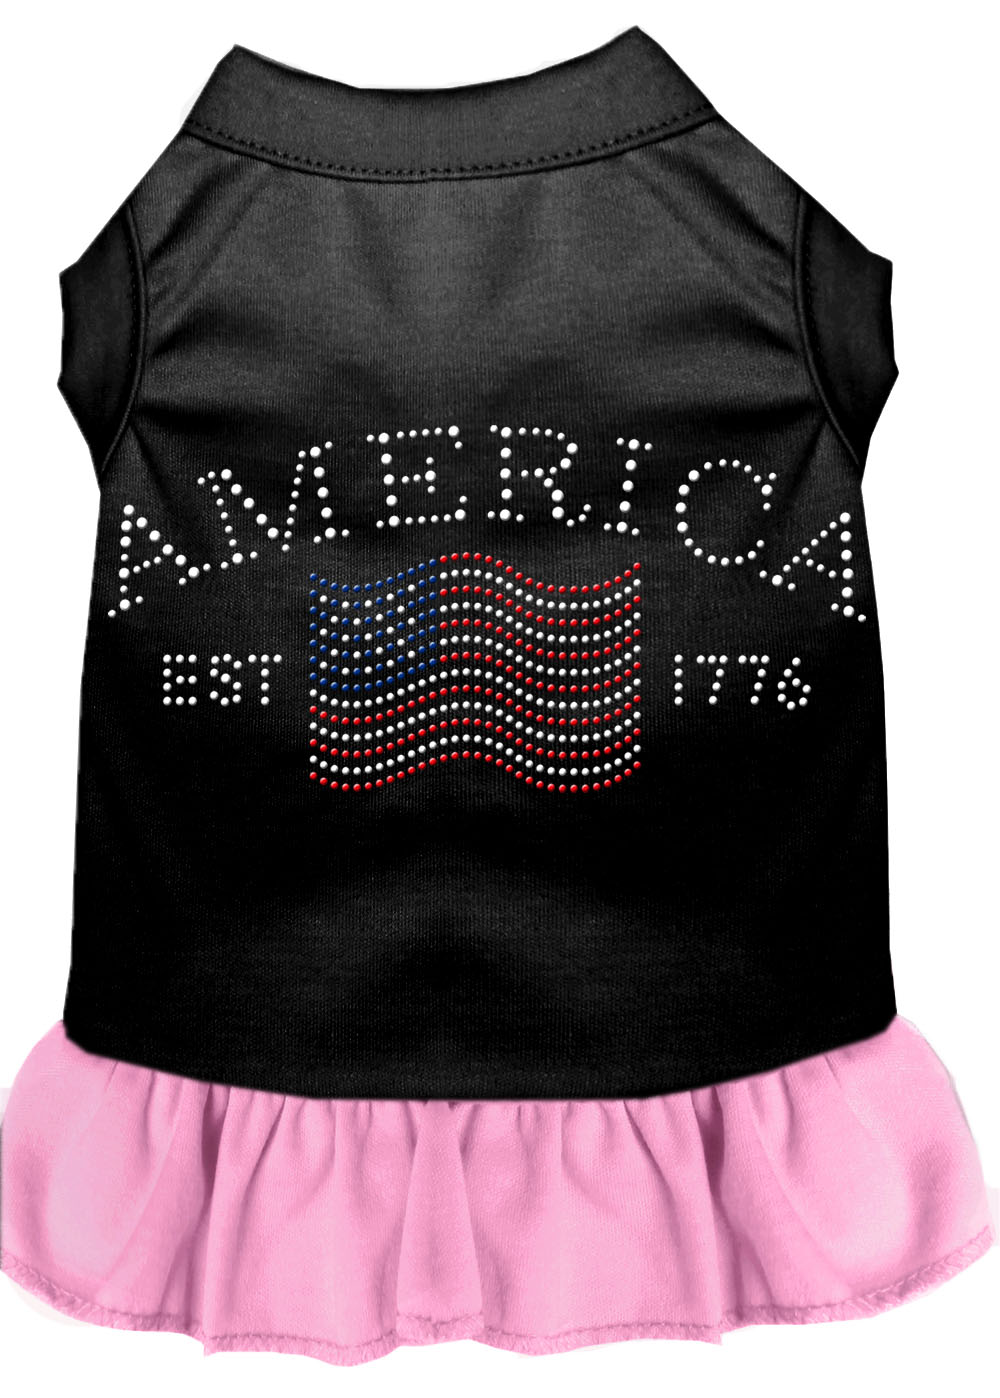 Classic America Rhinestone Dress Black with Light Pink XS